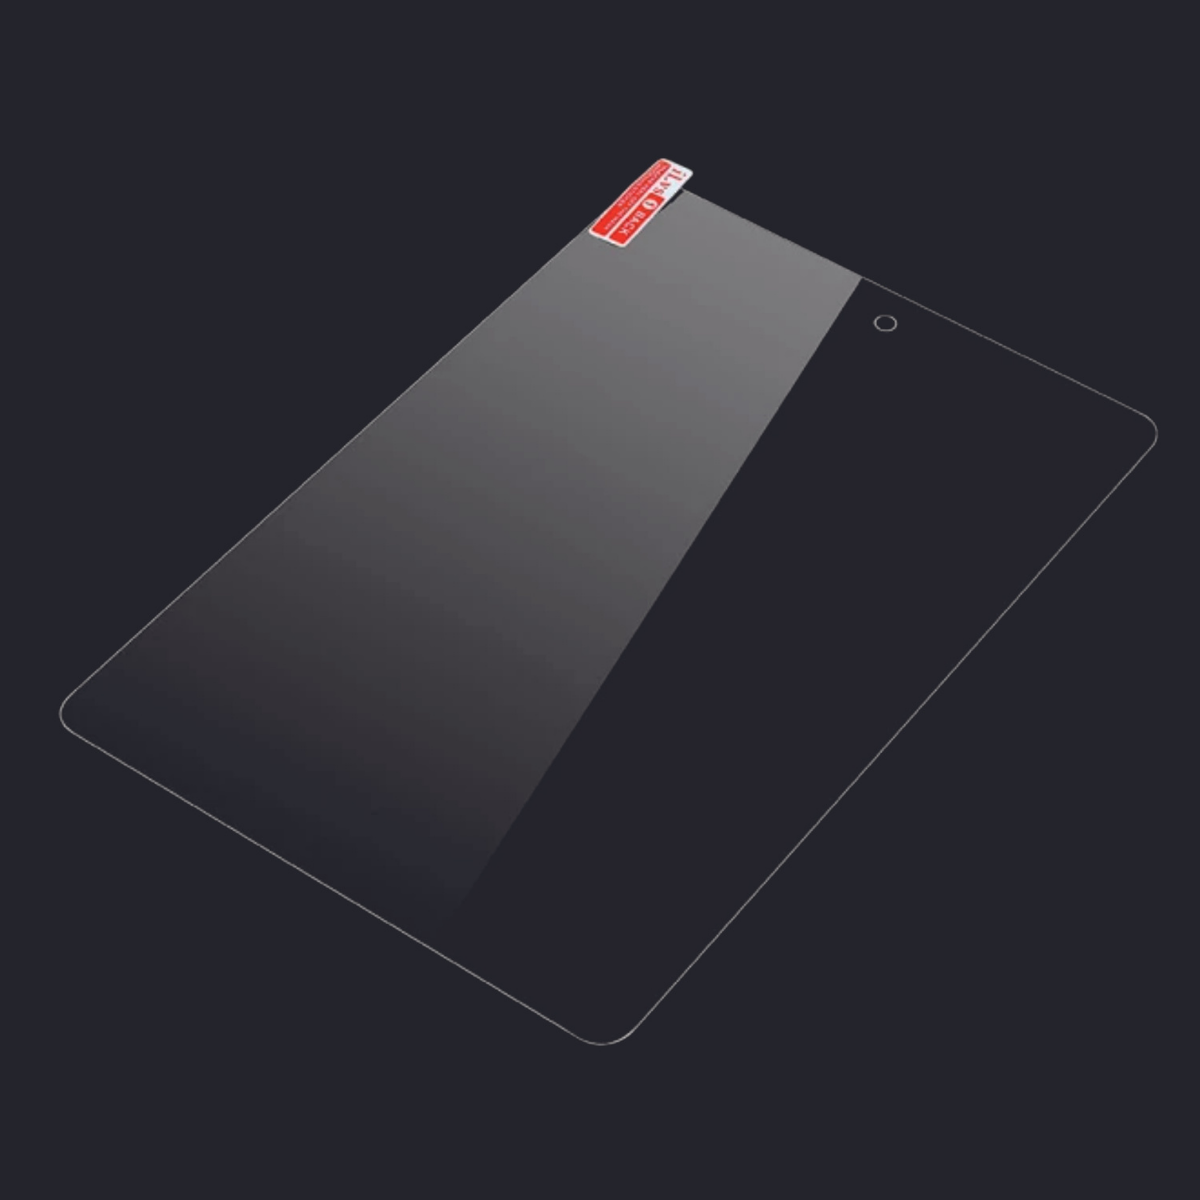 Blackview Tab 9 Tablet Screen Guard